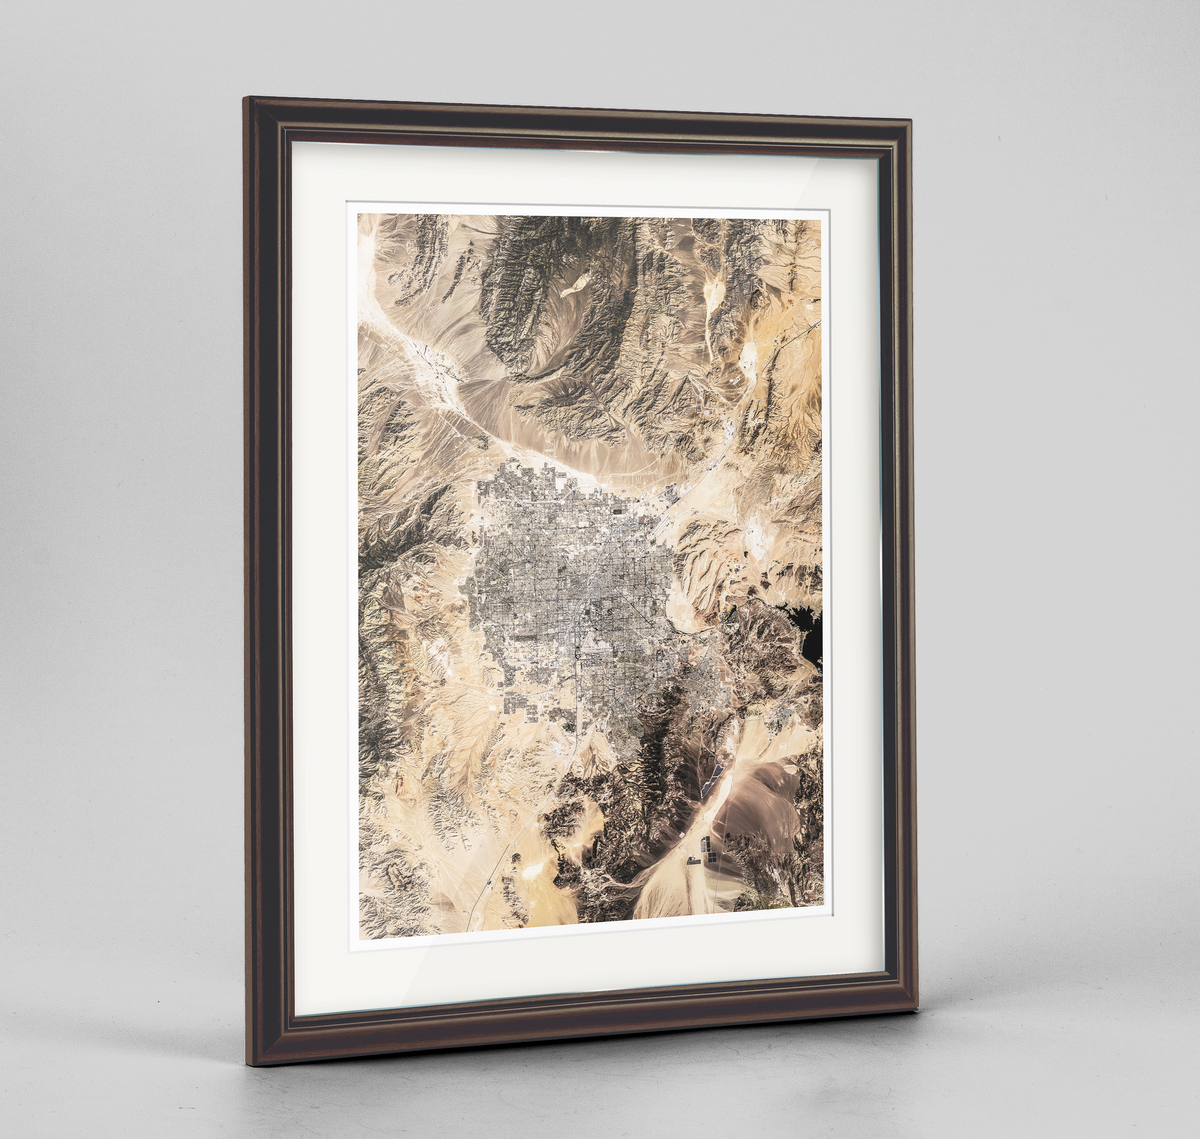 Las Vegas Earth Photography Art Print - Framed